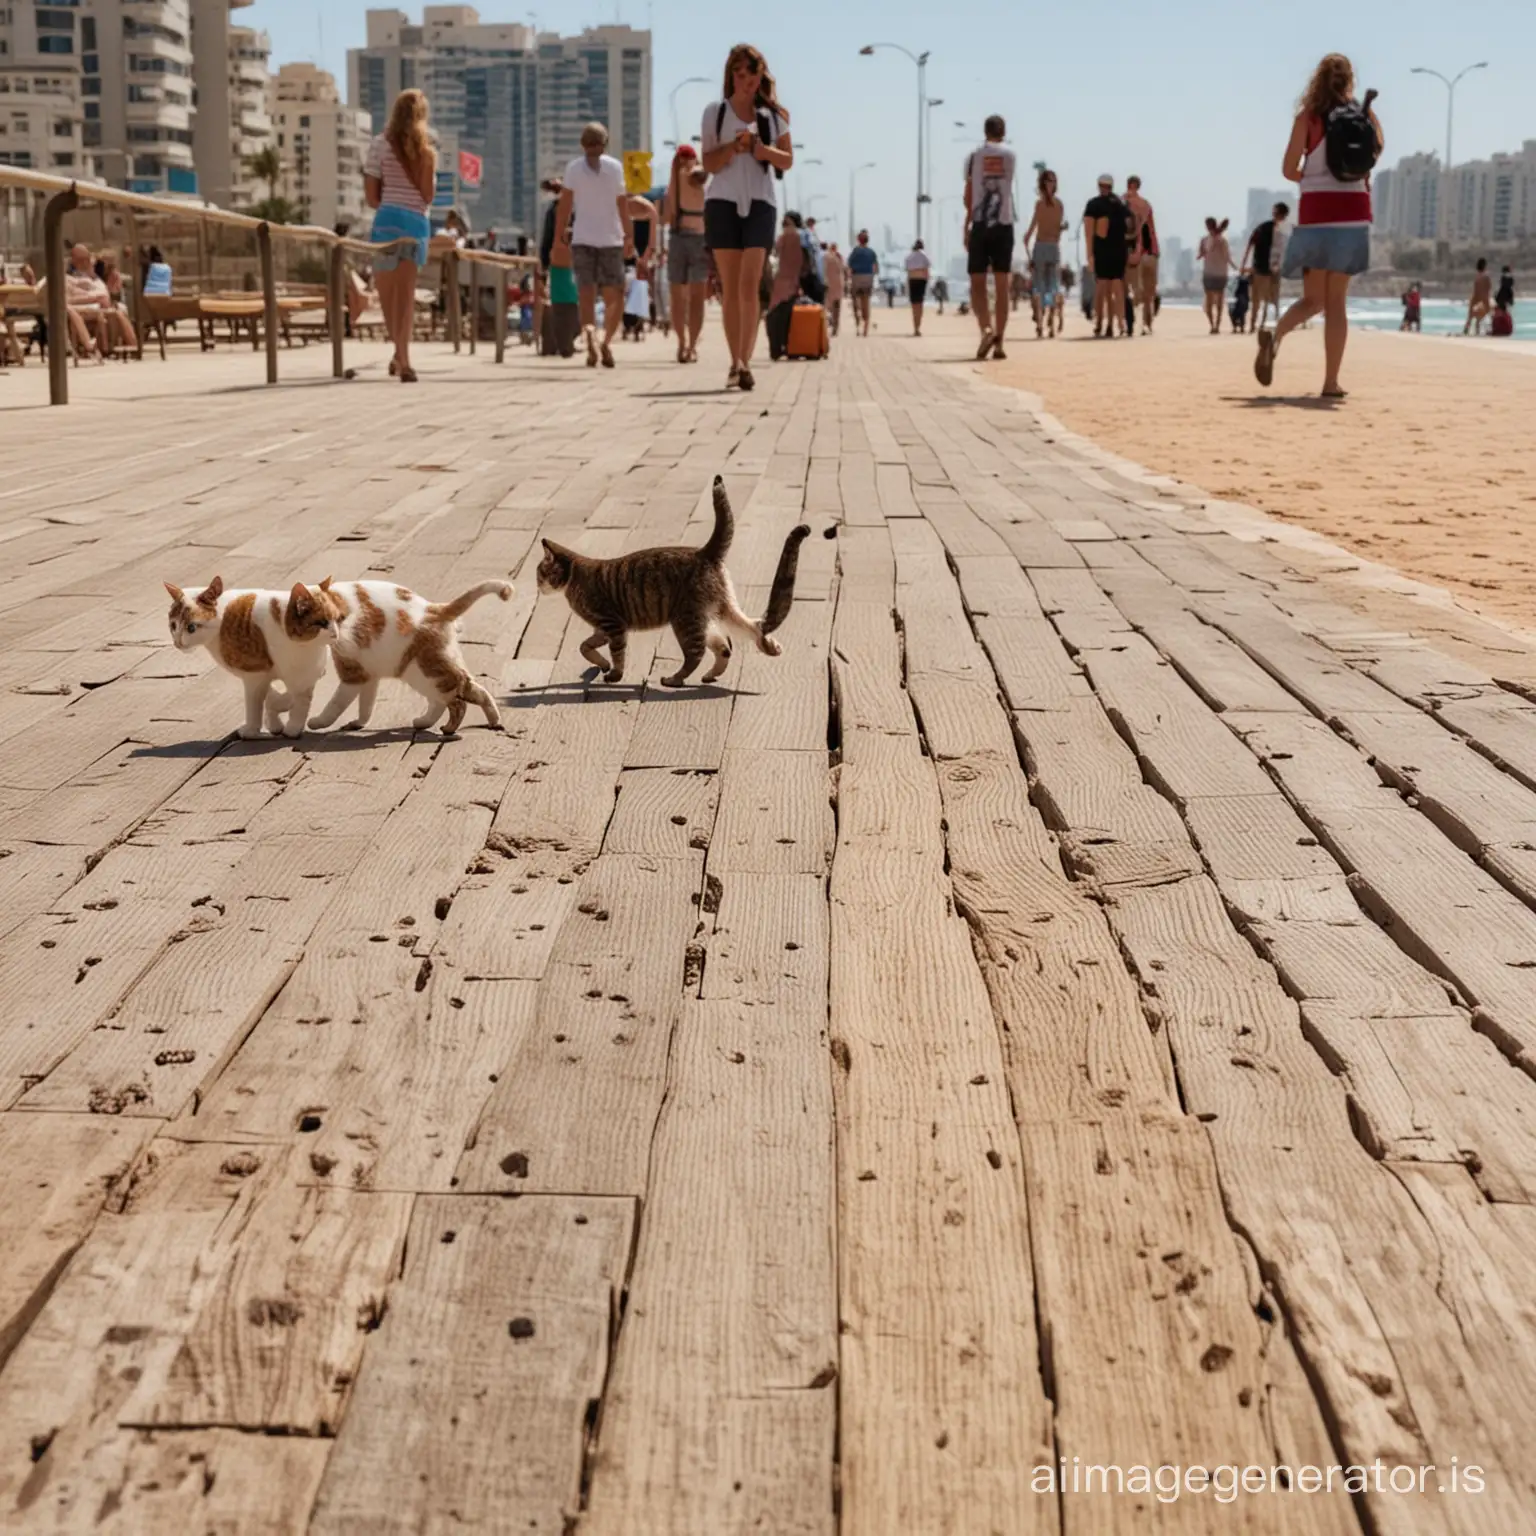 Vibrant-Tel-Aviv-Boardwalk-Scene-People-and-Cats-Enjoying-Coastal-Ambiance